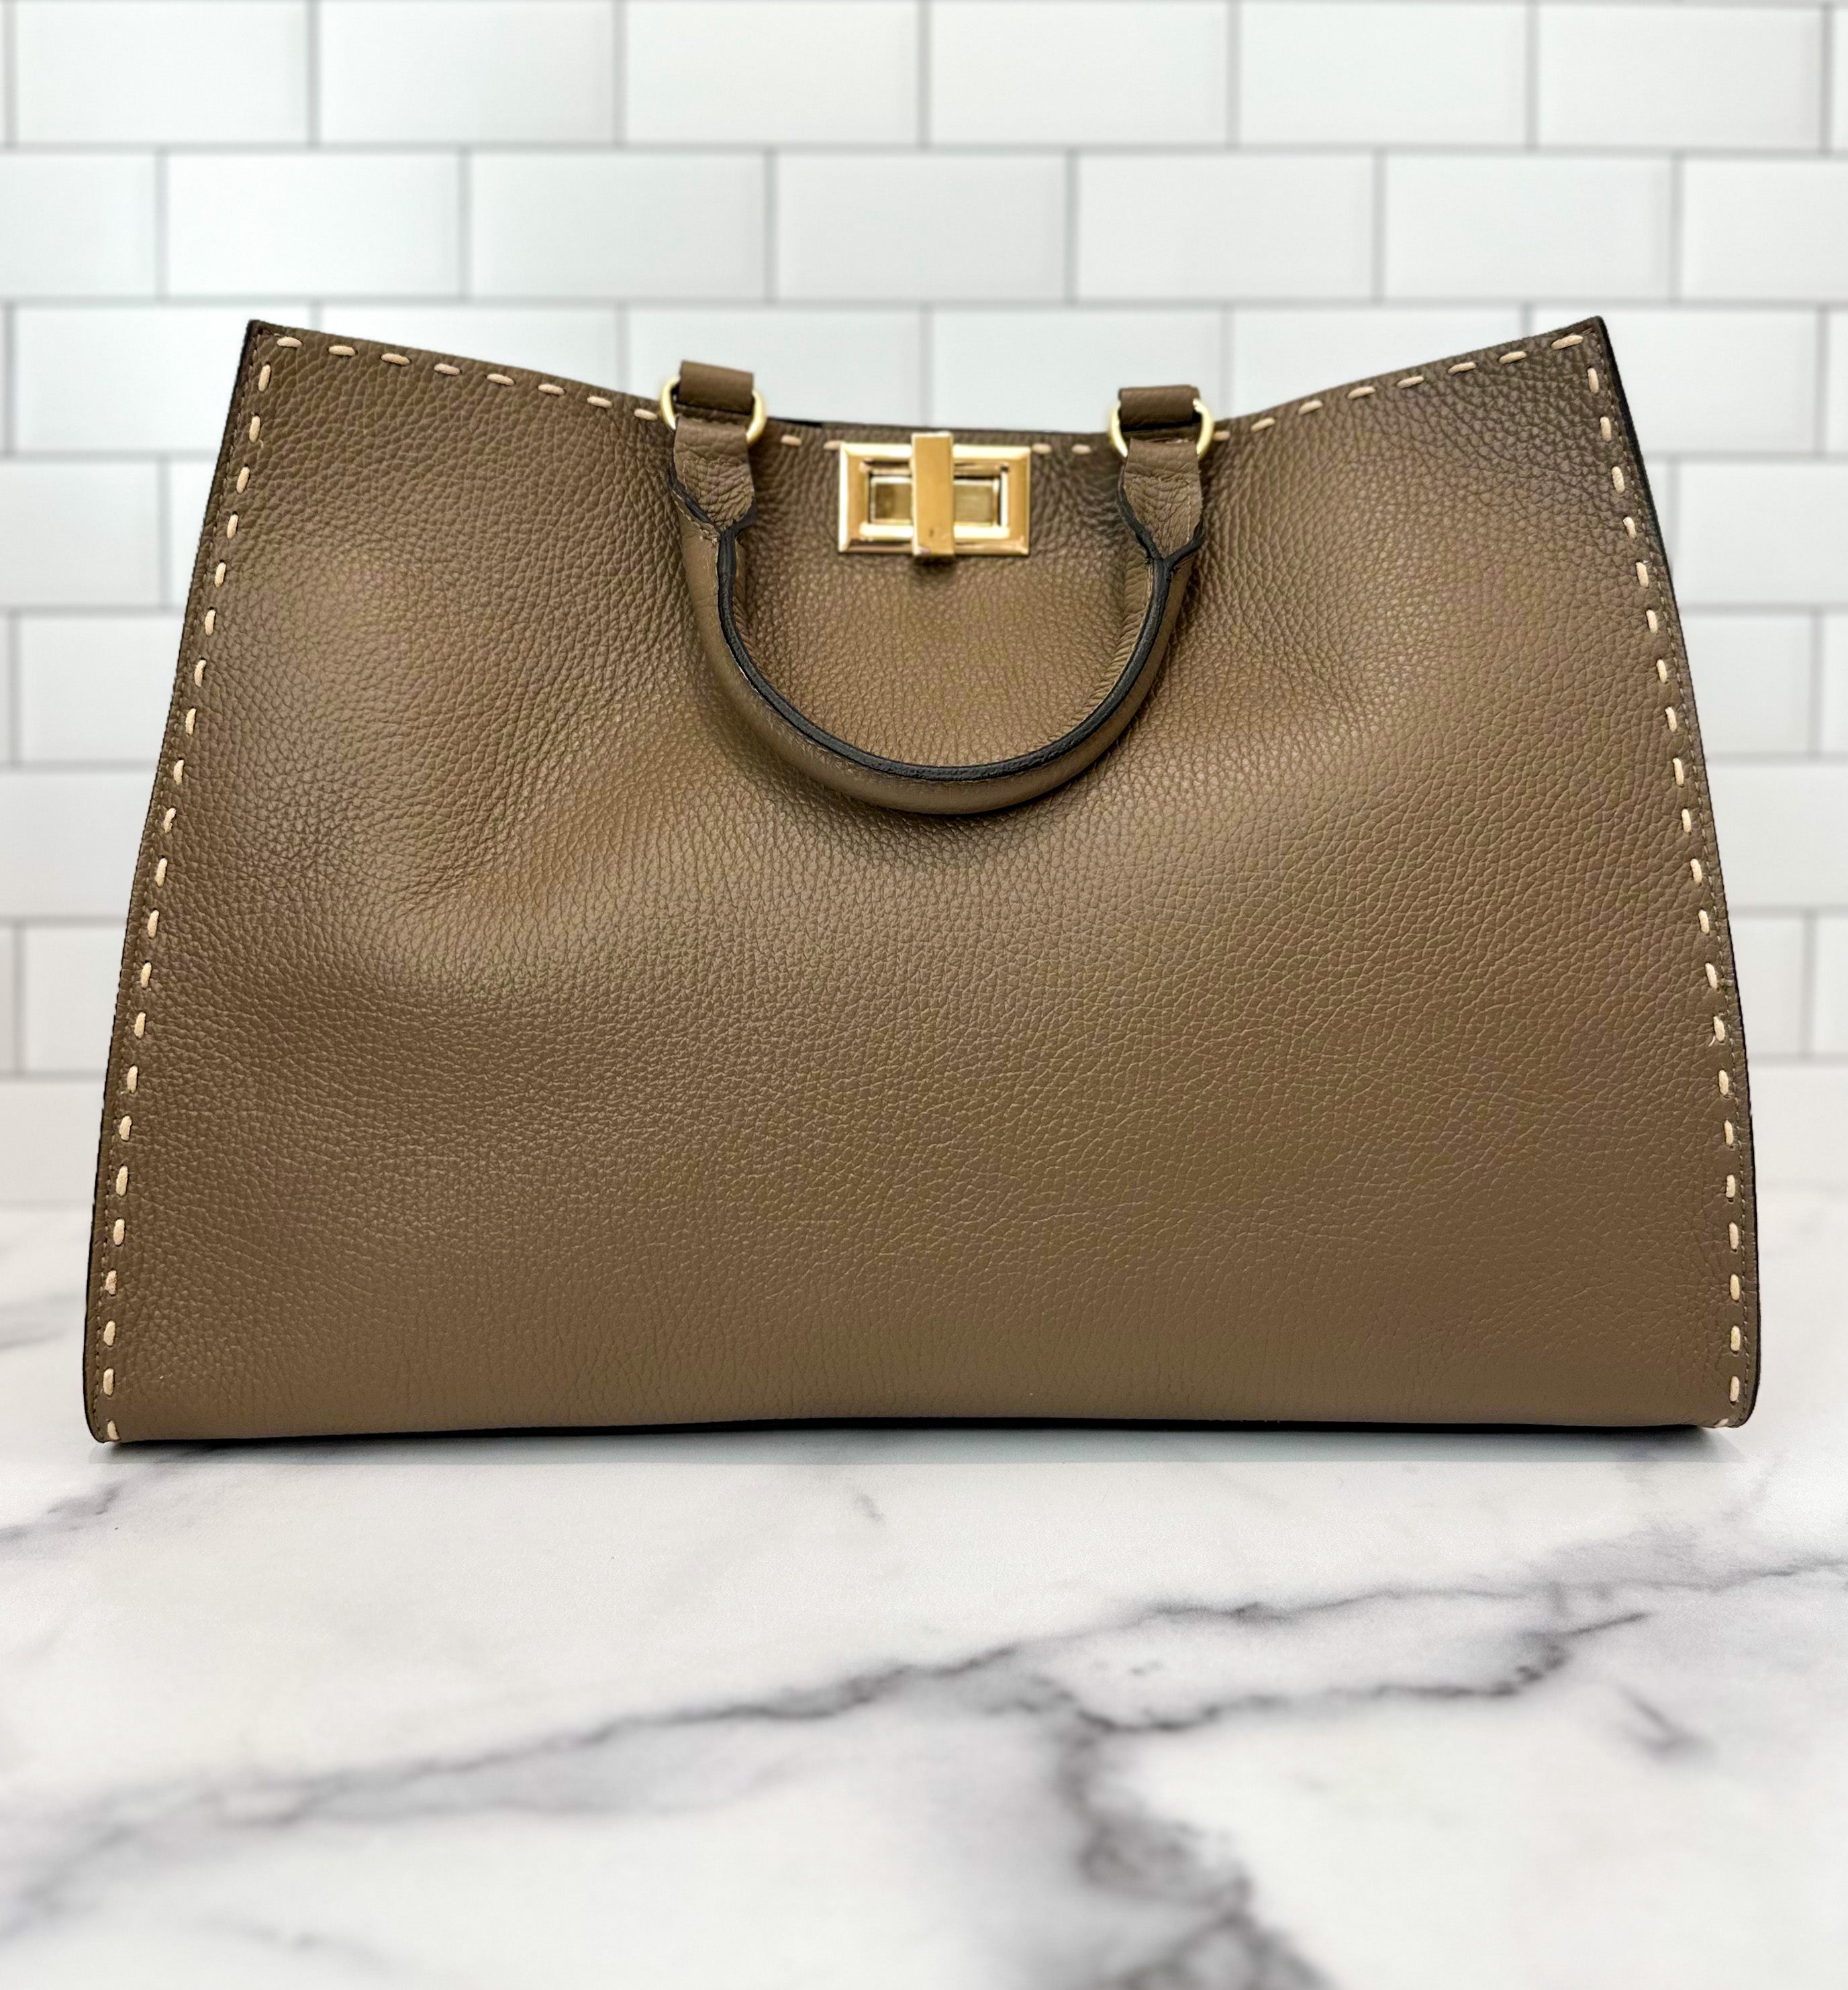 Shop www.thebagicon.com for affordable designer inspired handbags. 30%